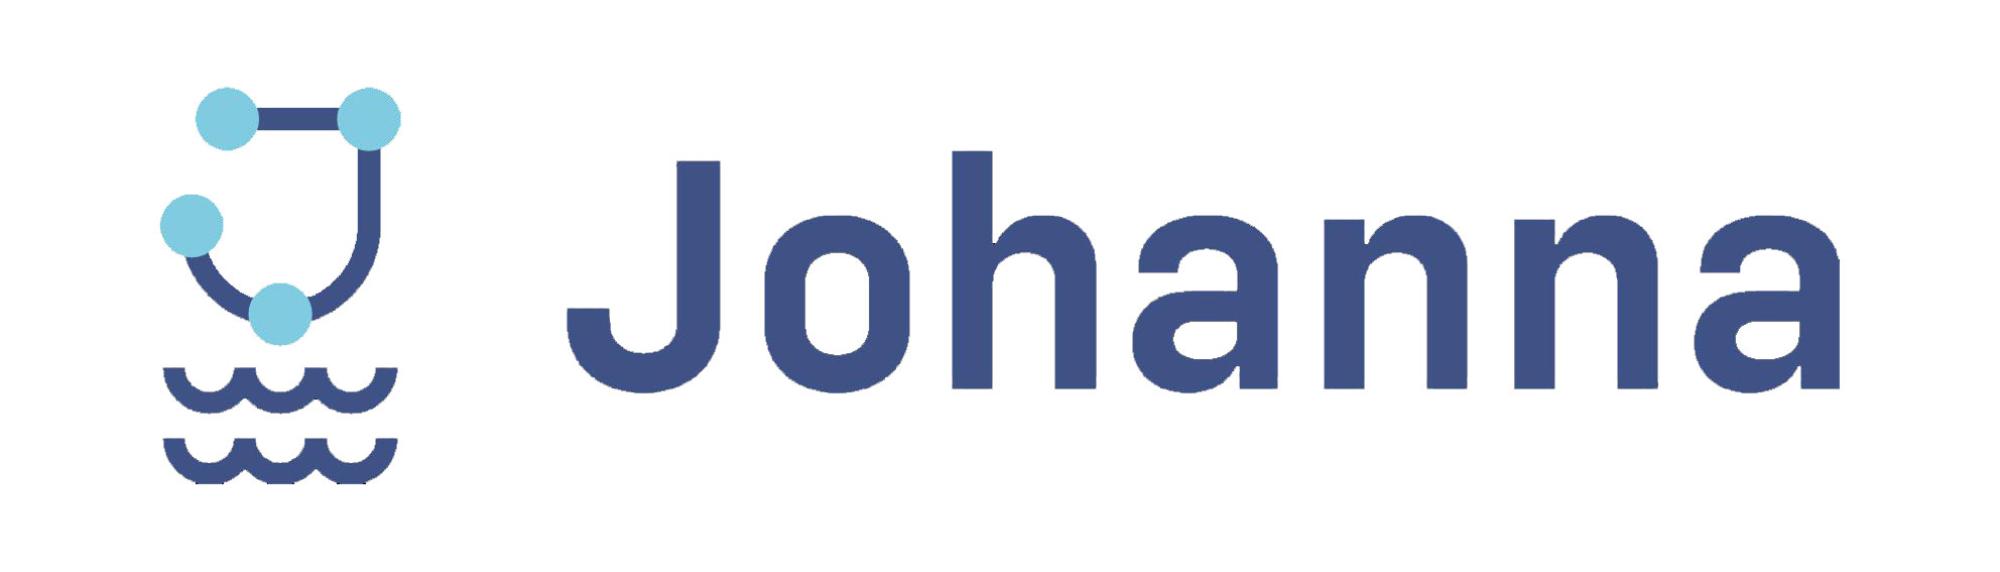 Johanna-logga